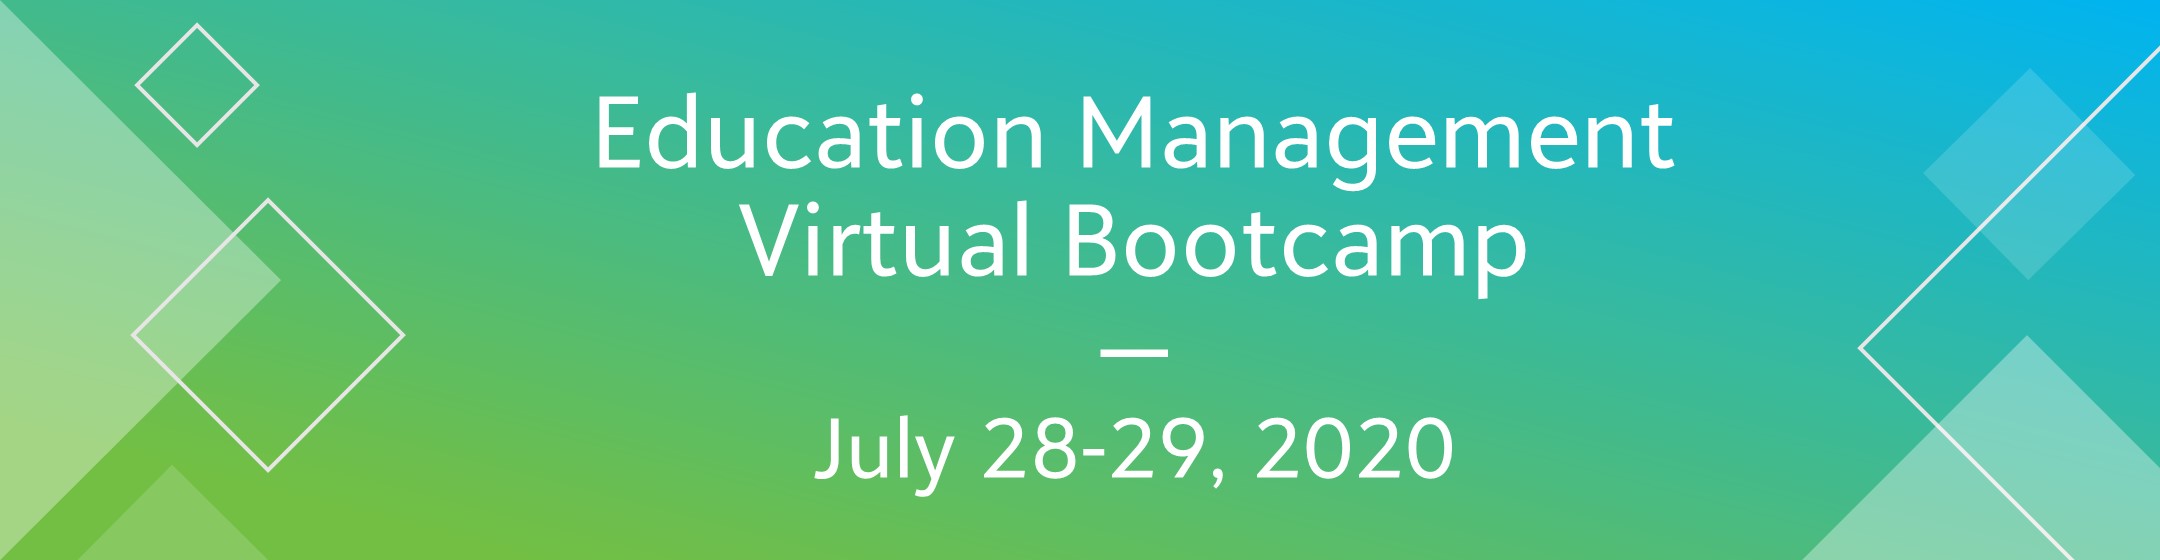 Blackbaud Education Management Virtual Bootcamp 3119